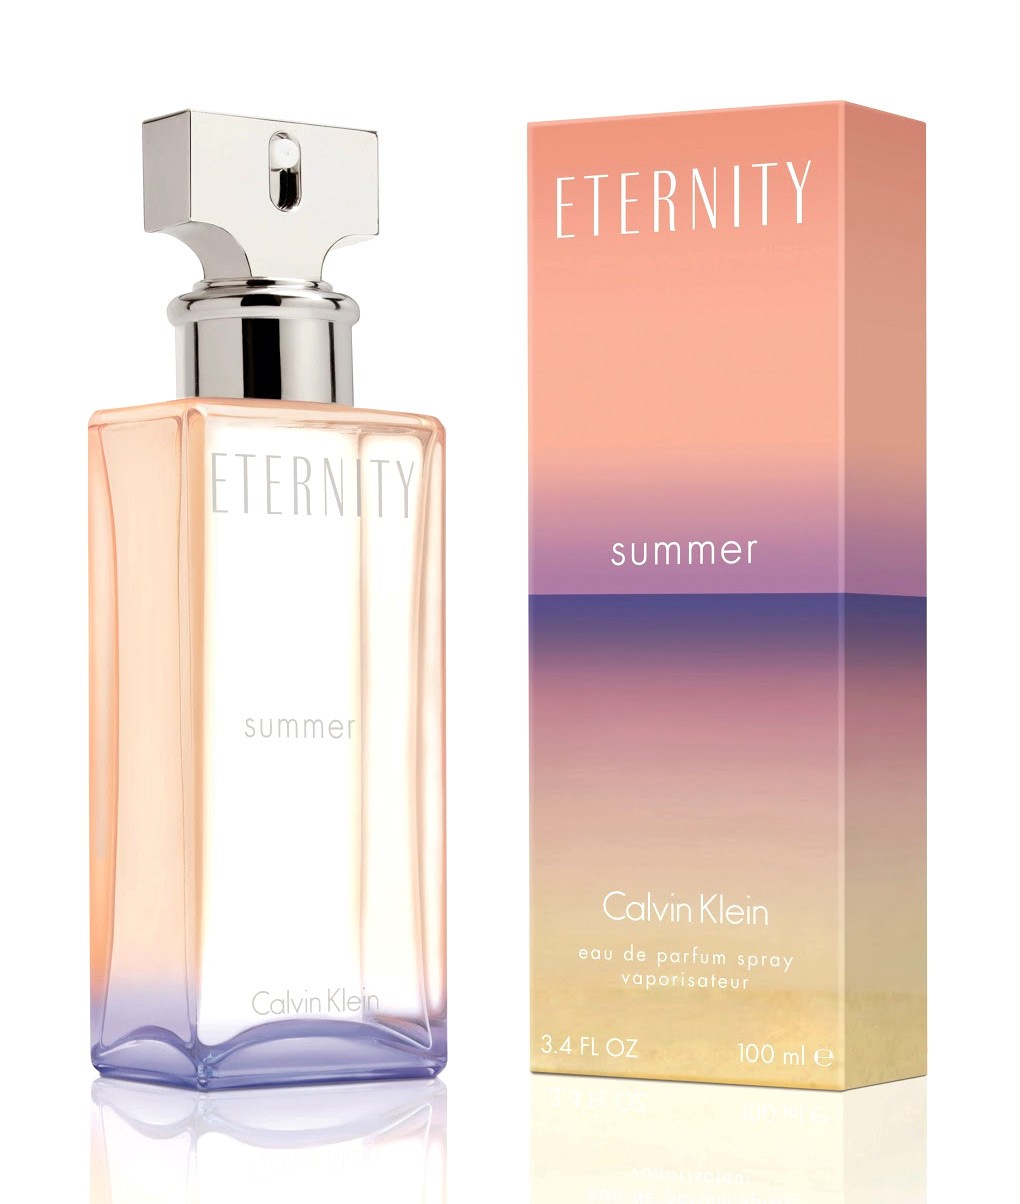 Изображение парфюма Calvin Klein Eternity Summer 2015